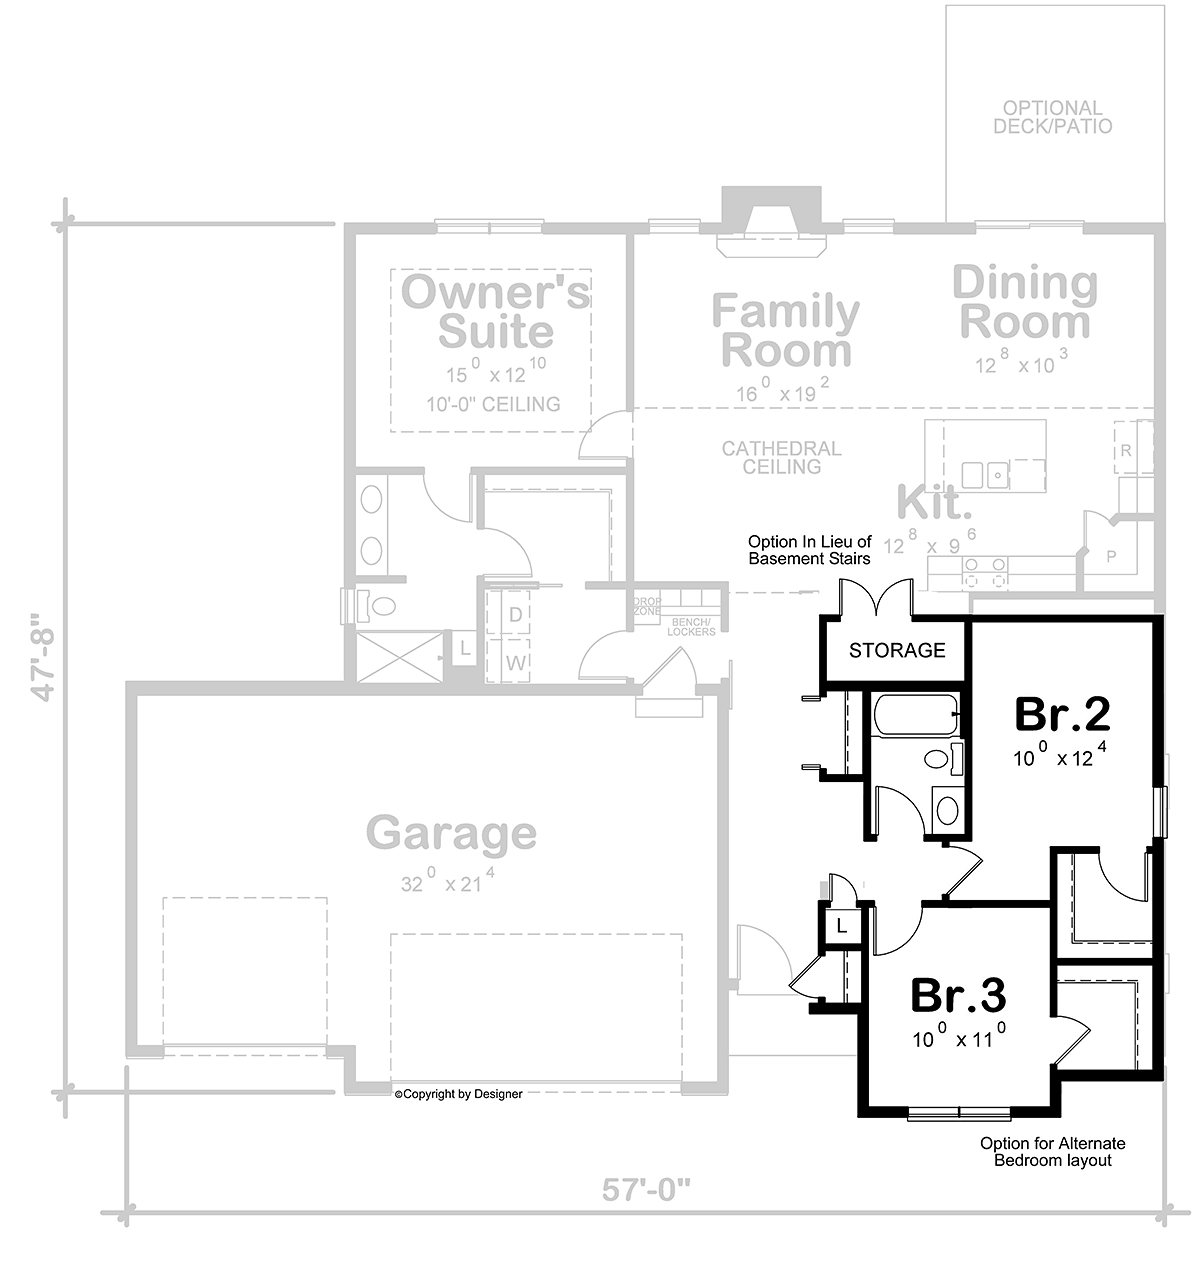 House Plan 81481 Alternate Level One